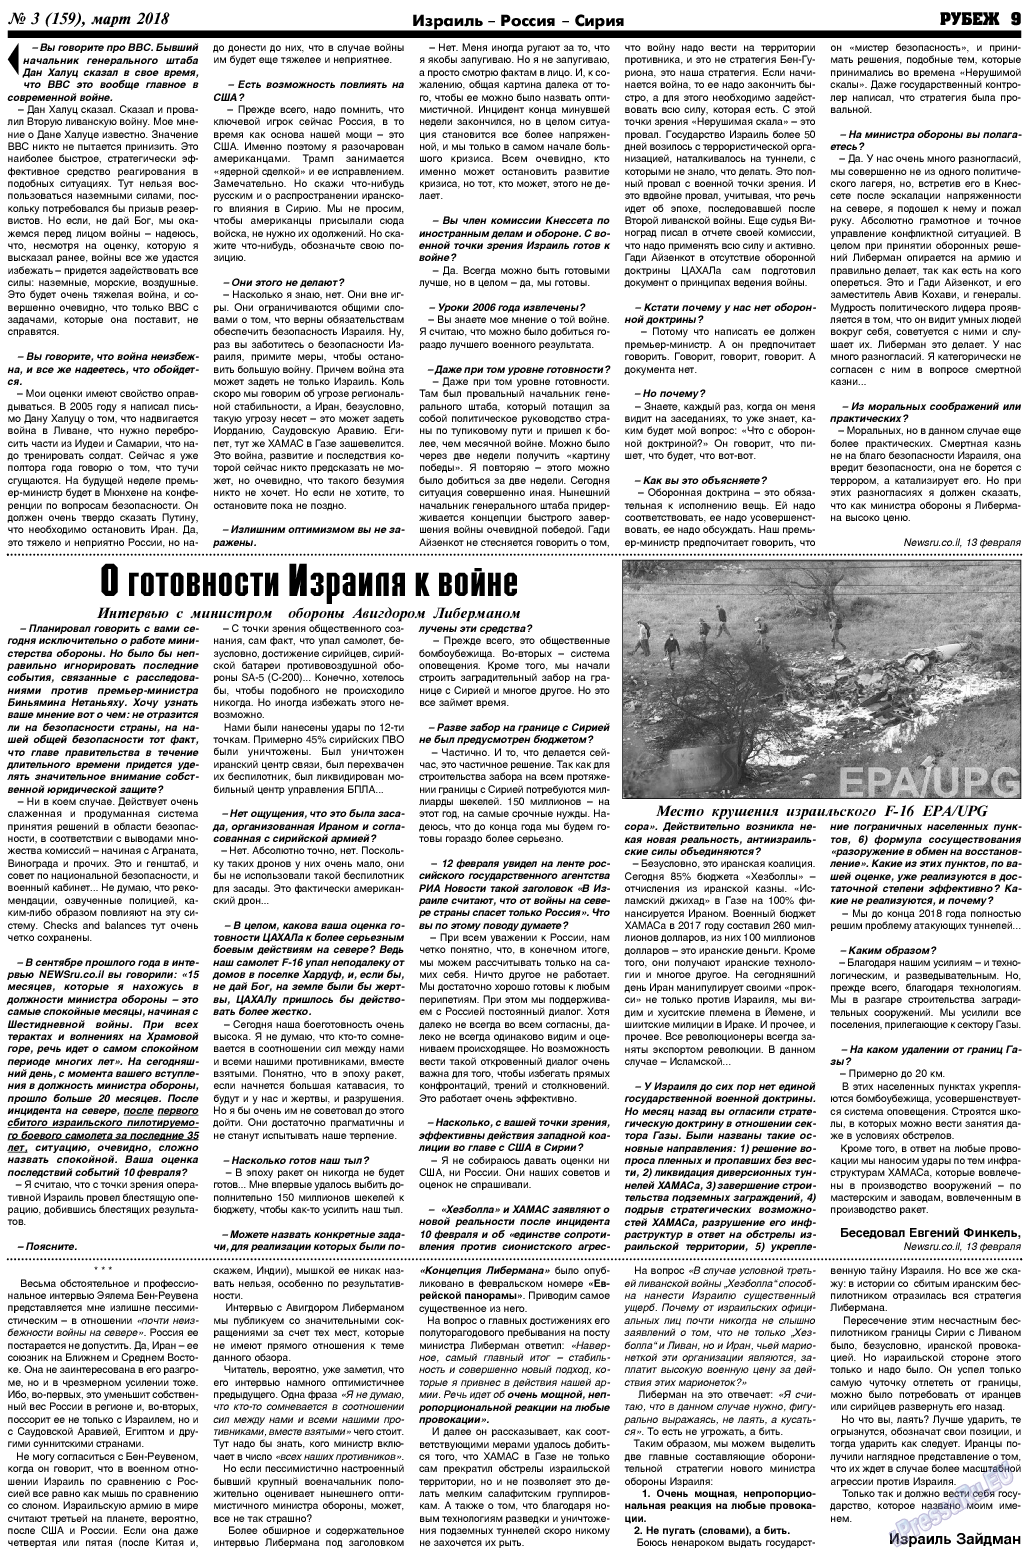 Рубеж, газета. 2018 №3 стр.9